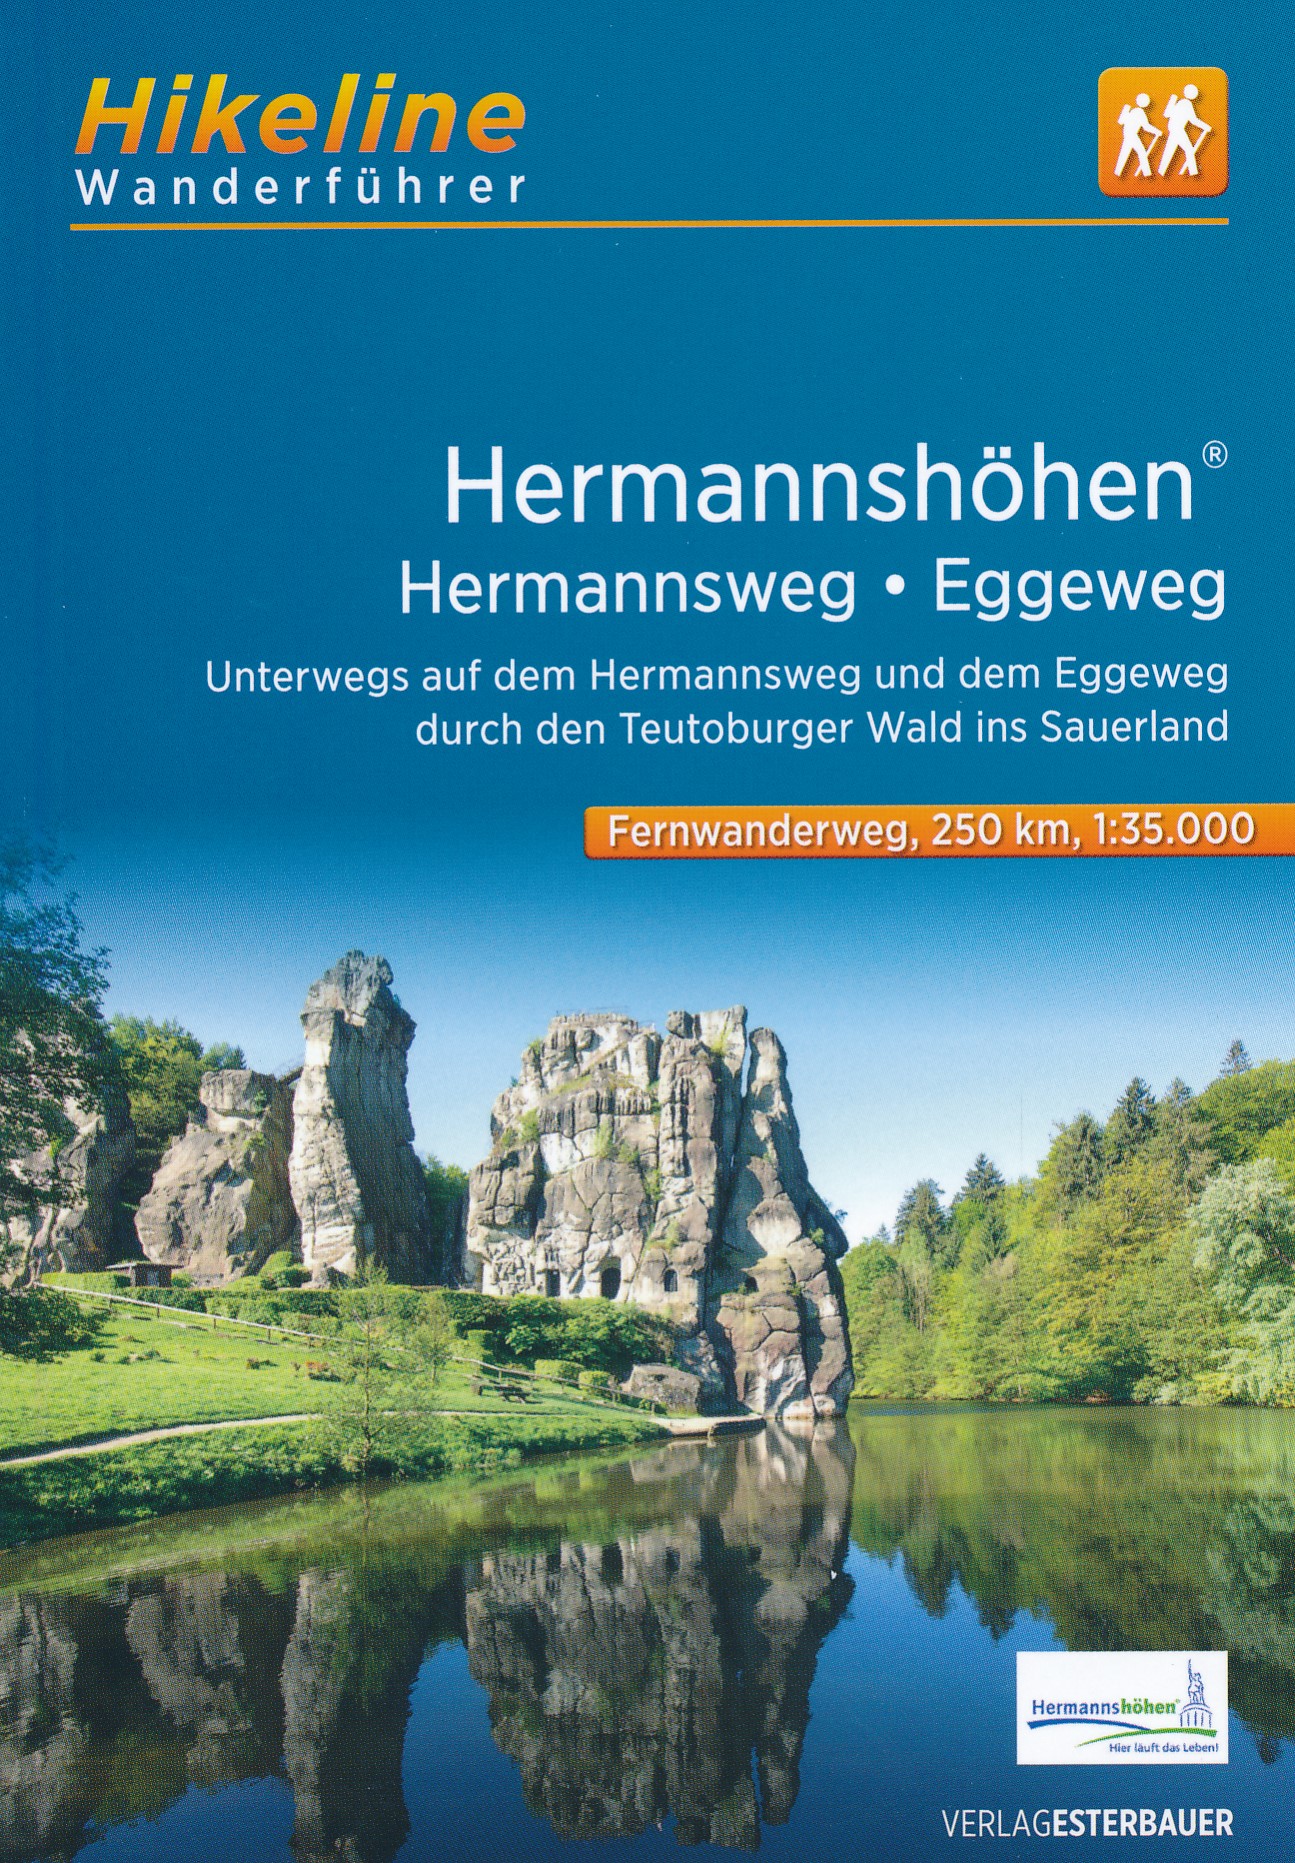 Online bestellen: Wandelgids Hikeline Hermannshöhen - Hermannsweg + Eggeweg | Esterbauer